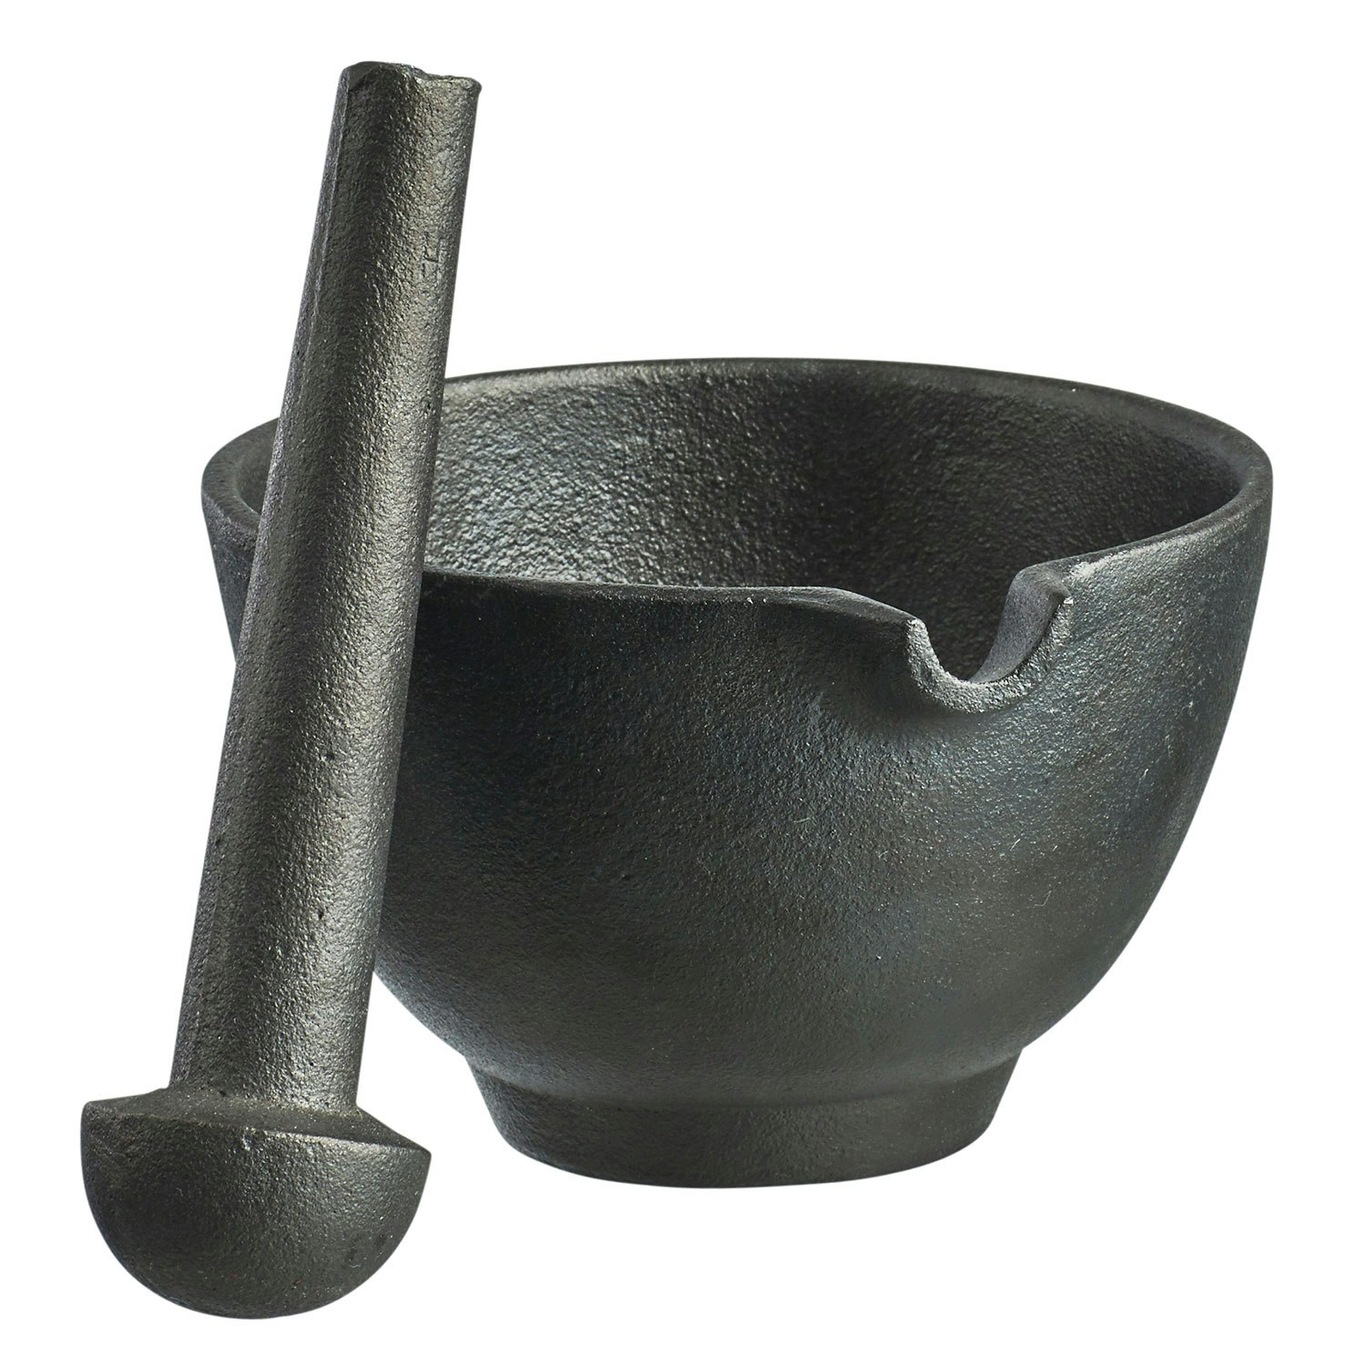 https://royaldesign.com/image/2/satake-nabe-mortar-with-pestle-black-3?w=800&quality=80